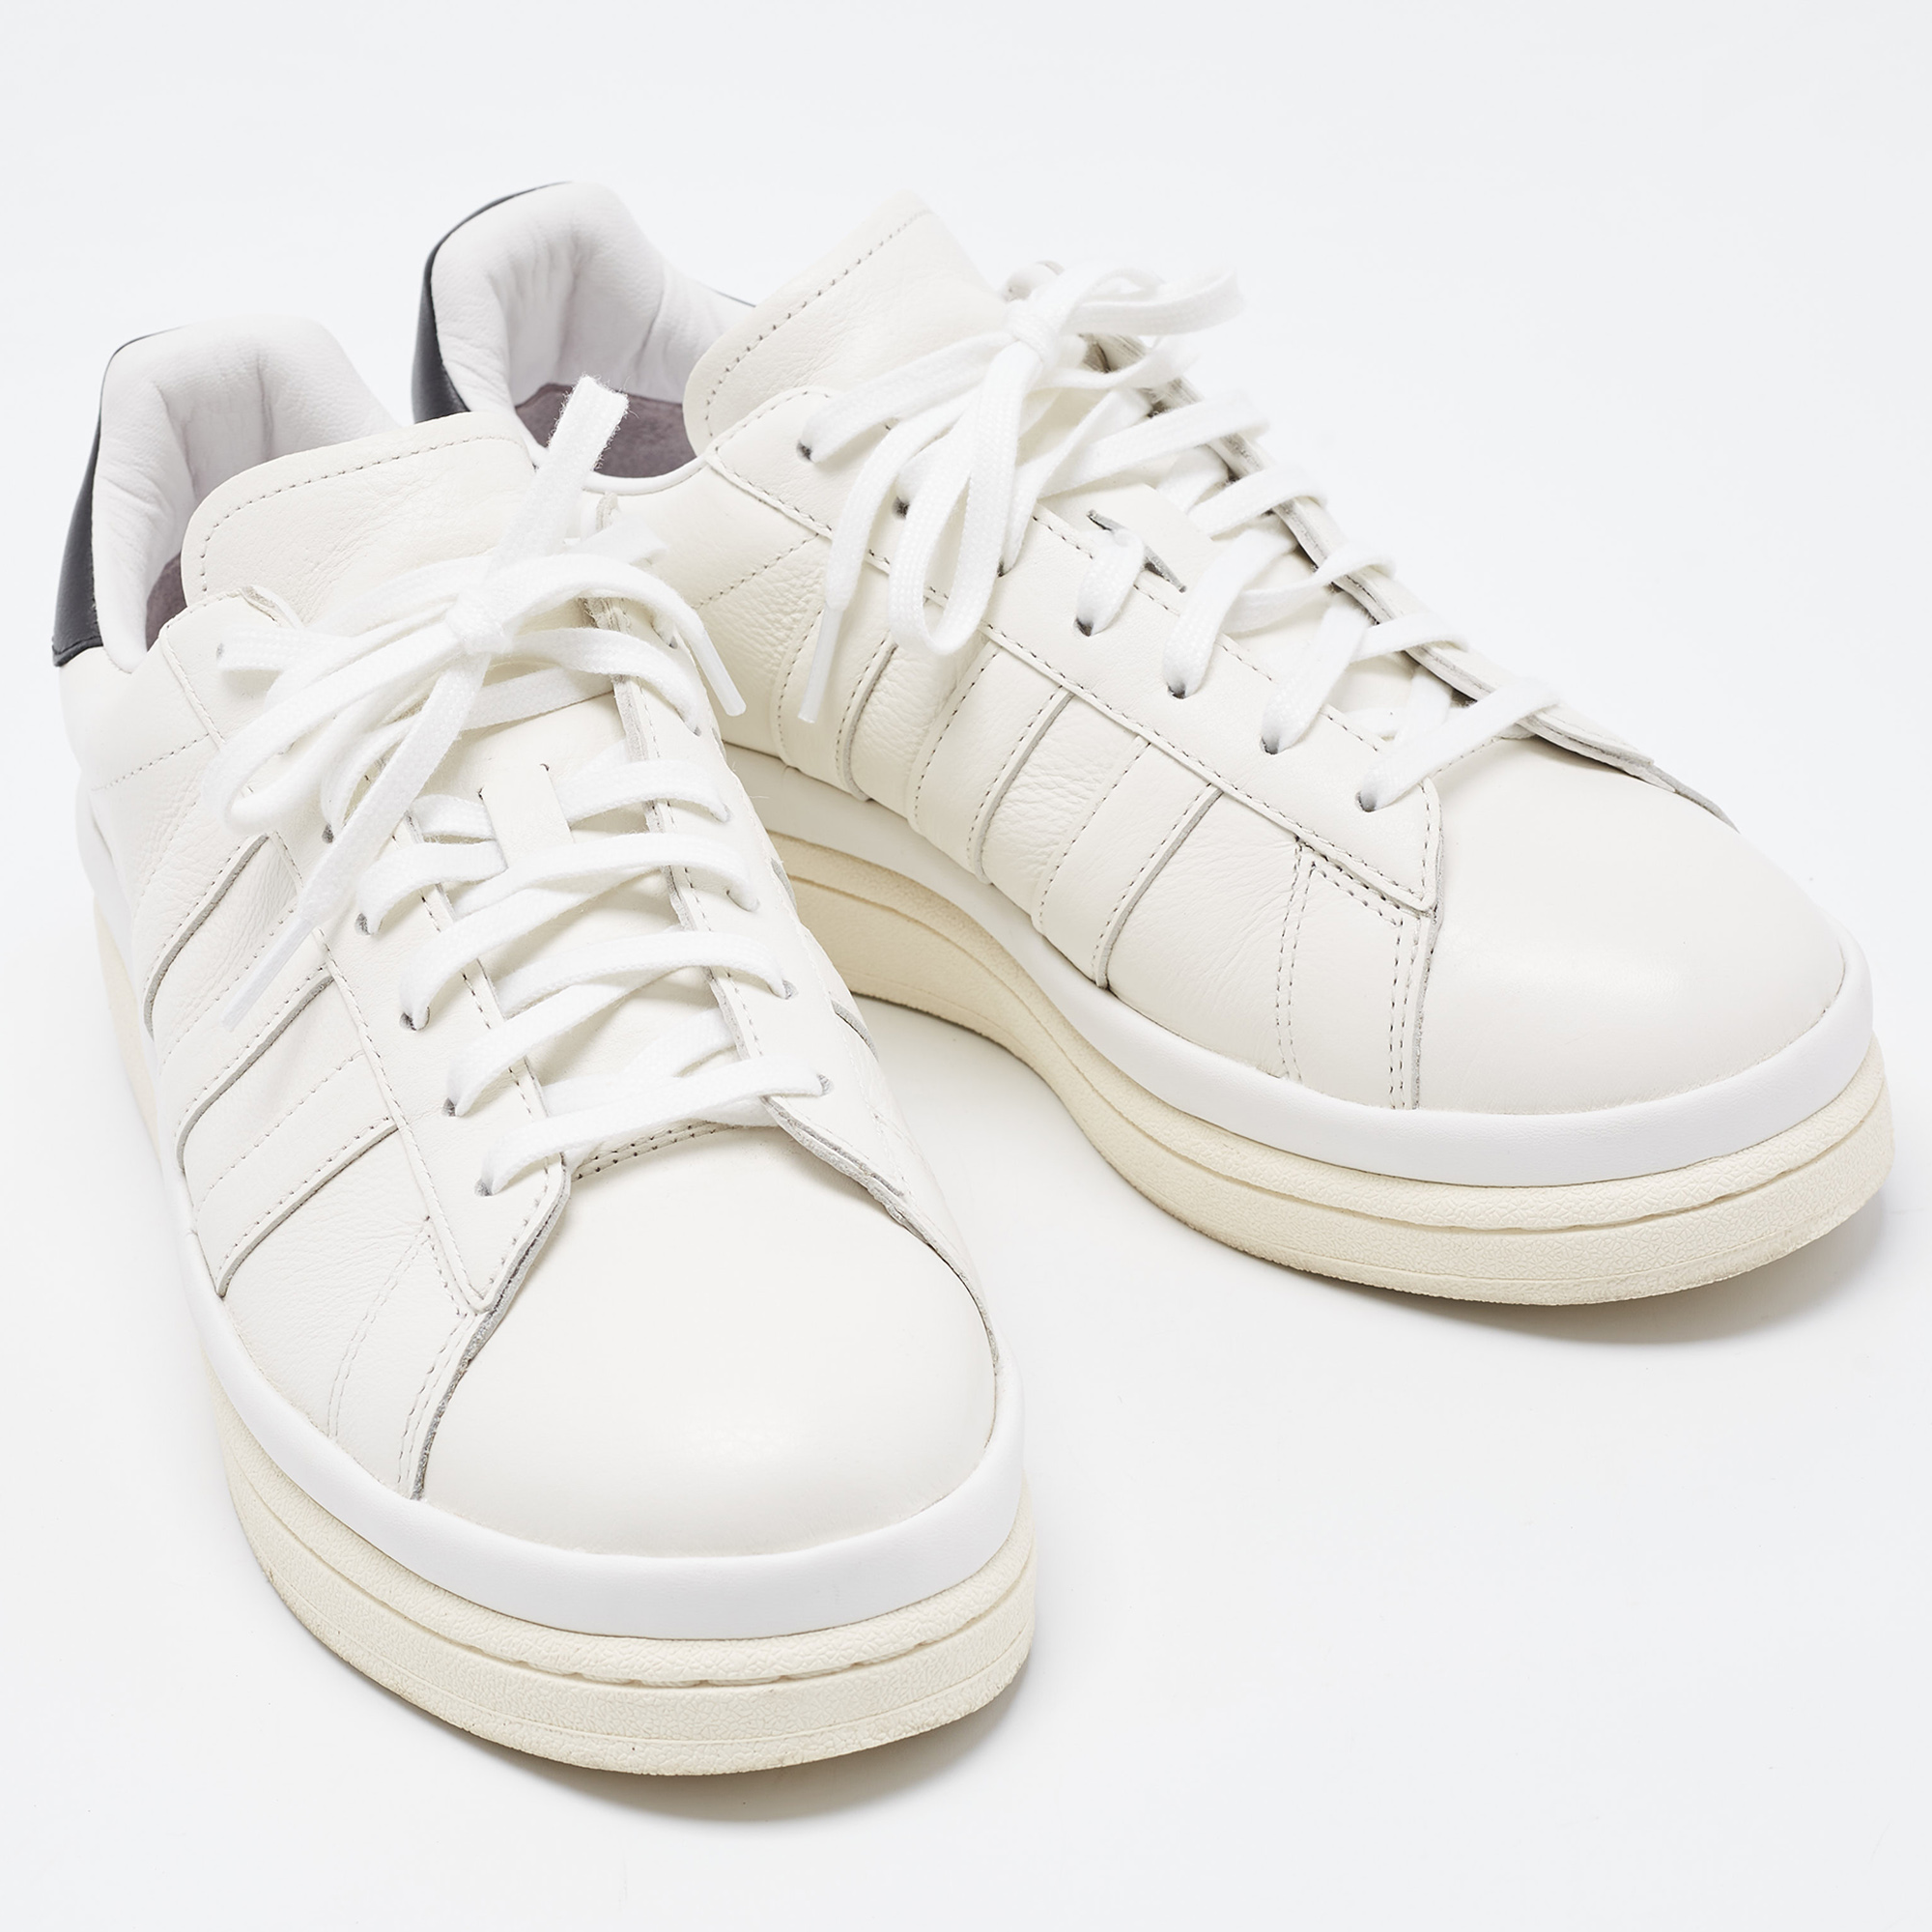 Y-3 White/Black Leather Yohji Star Low-Top Sneakers Size 42 2/3